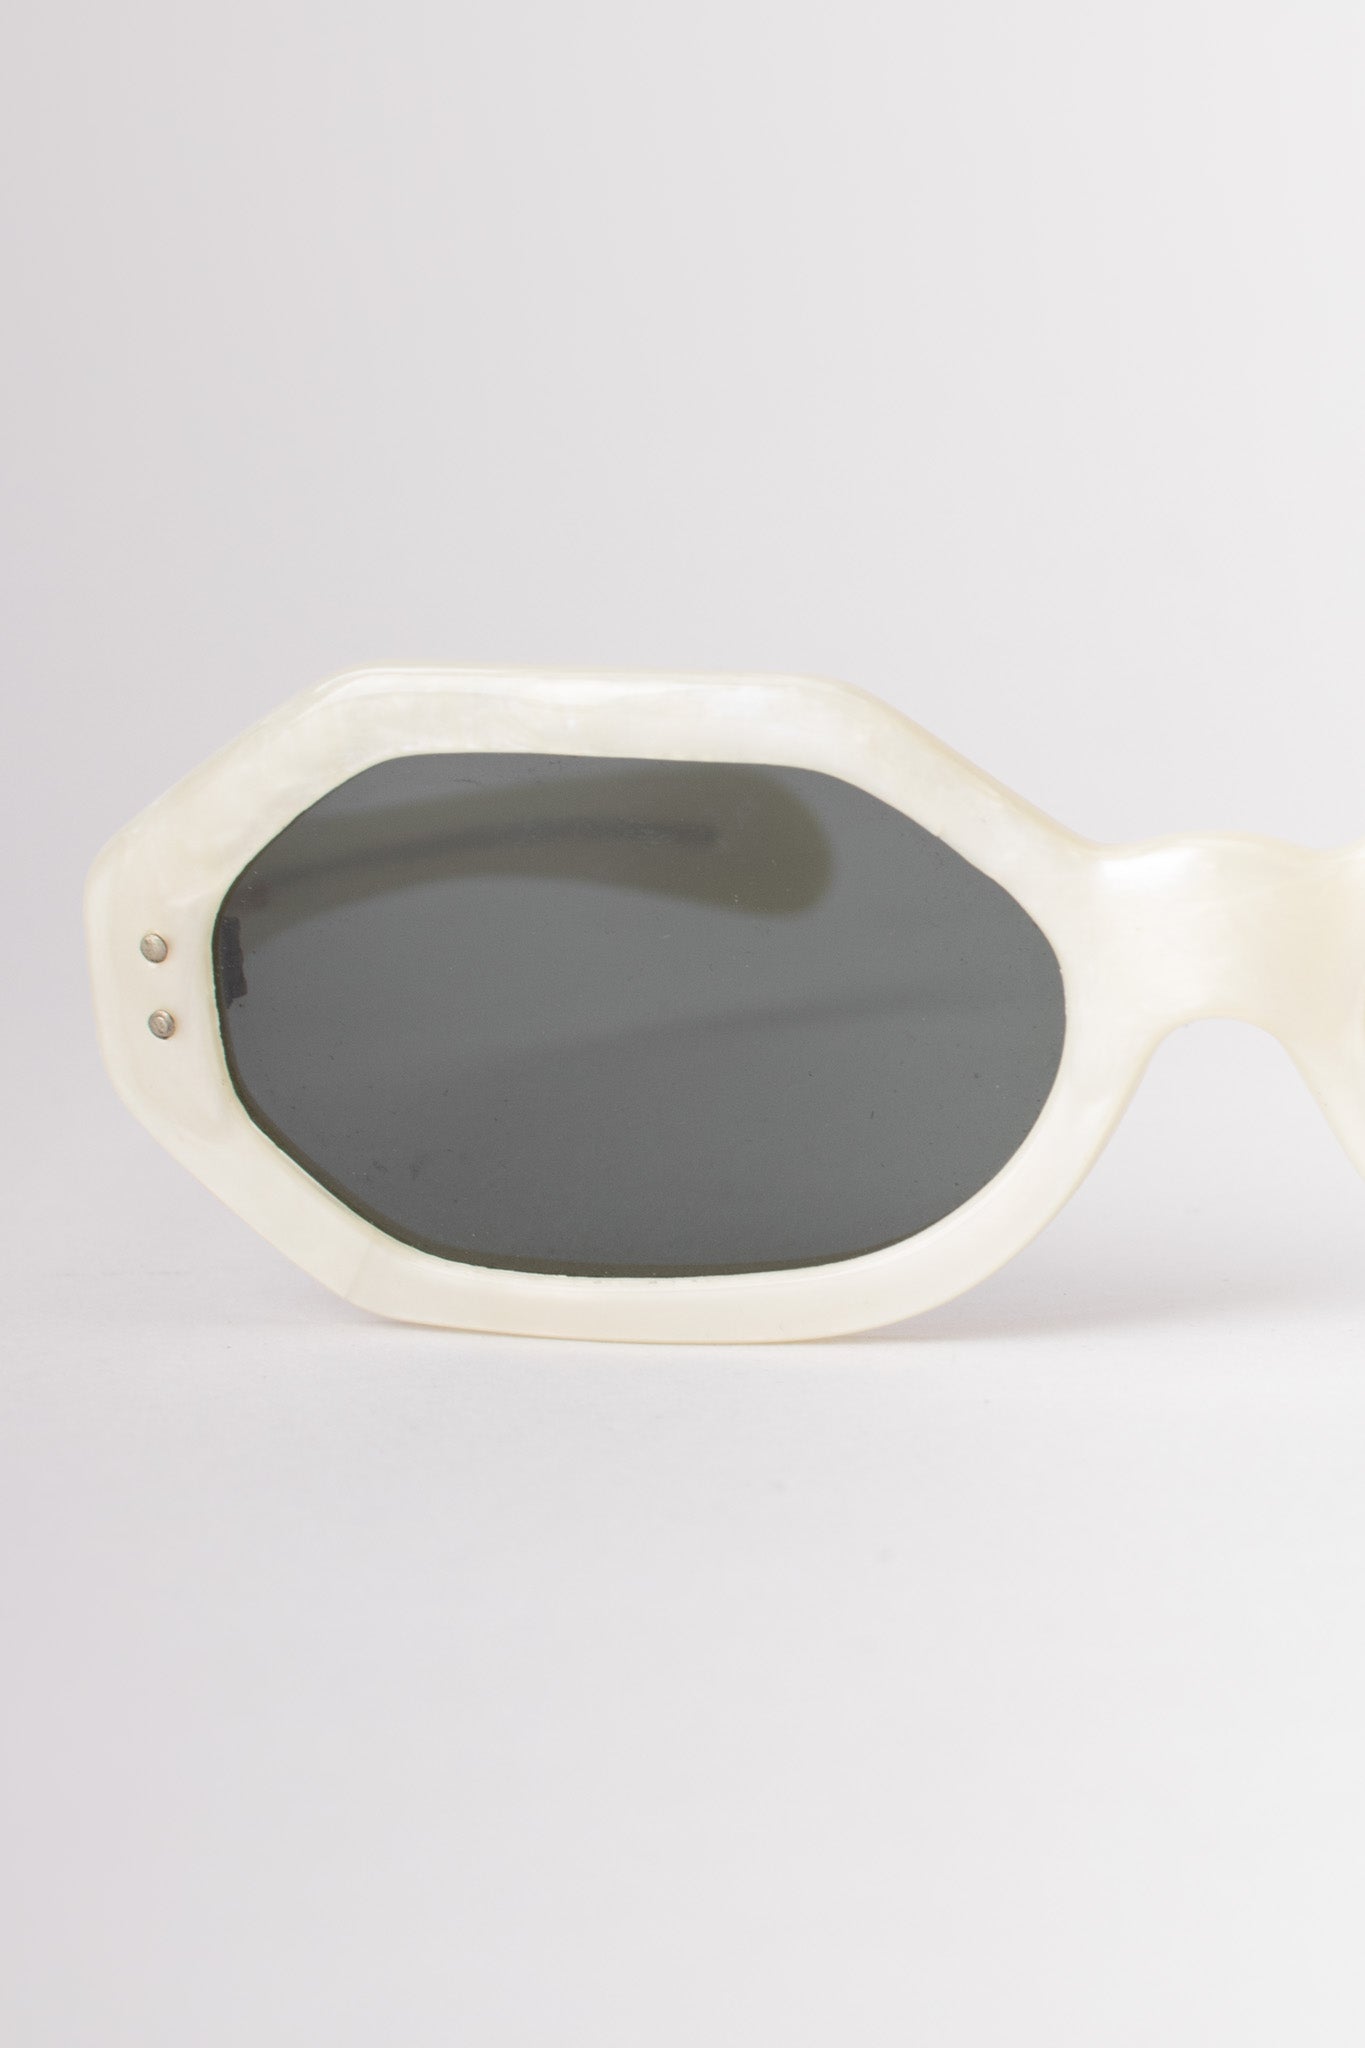 Omura France Octagonal Pearl Sunglasses